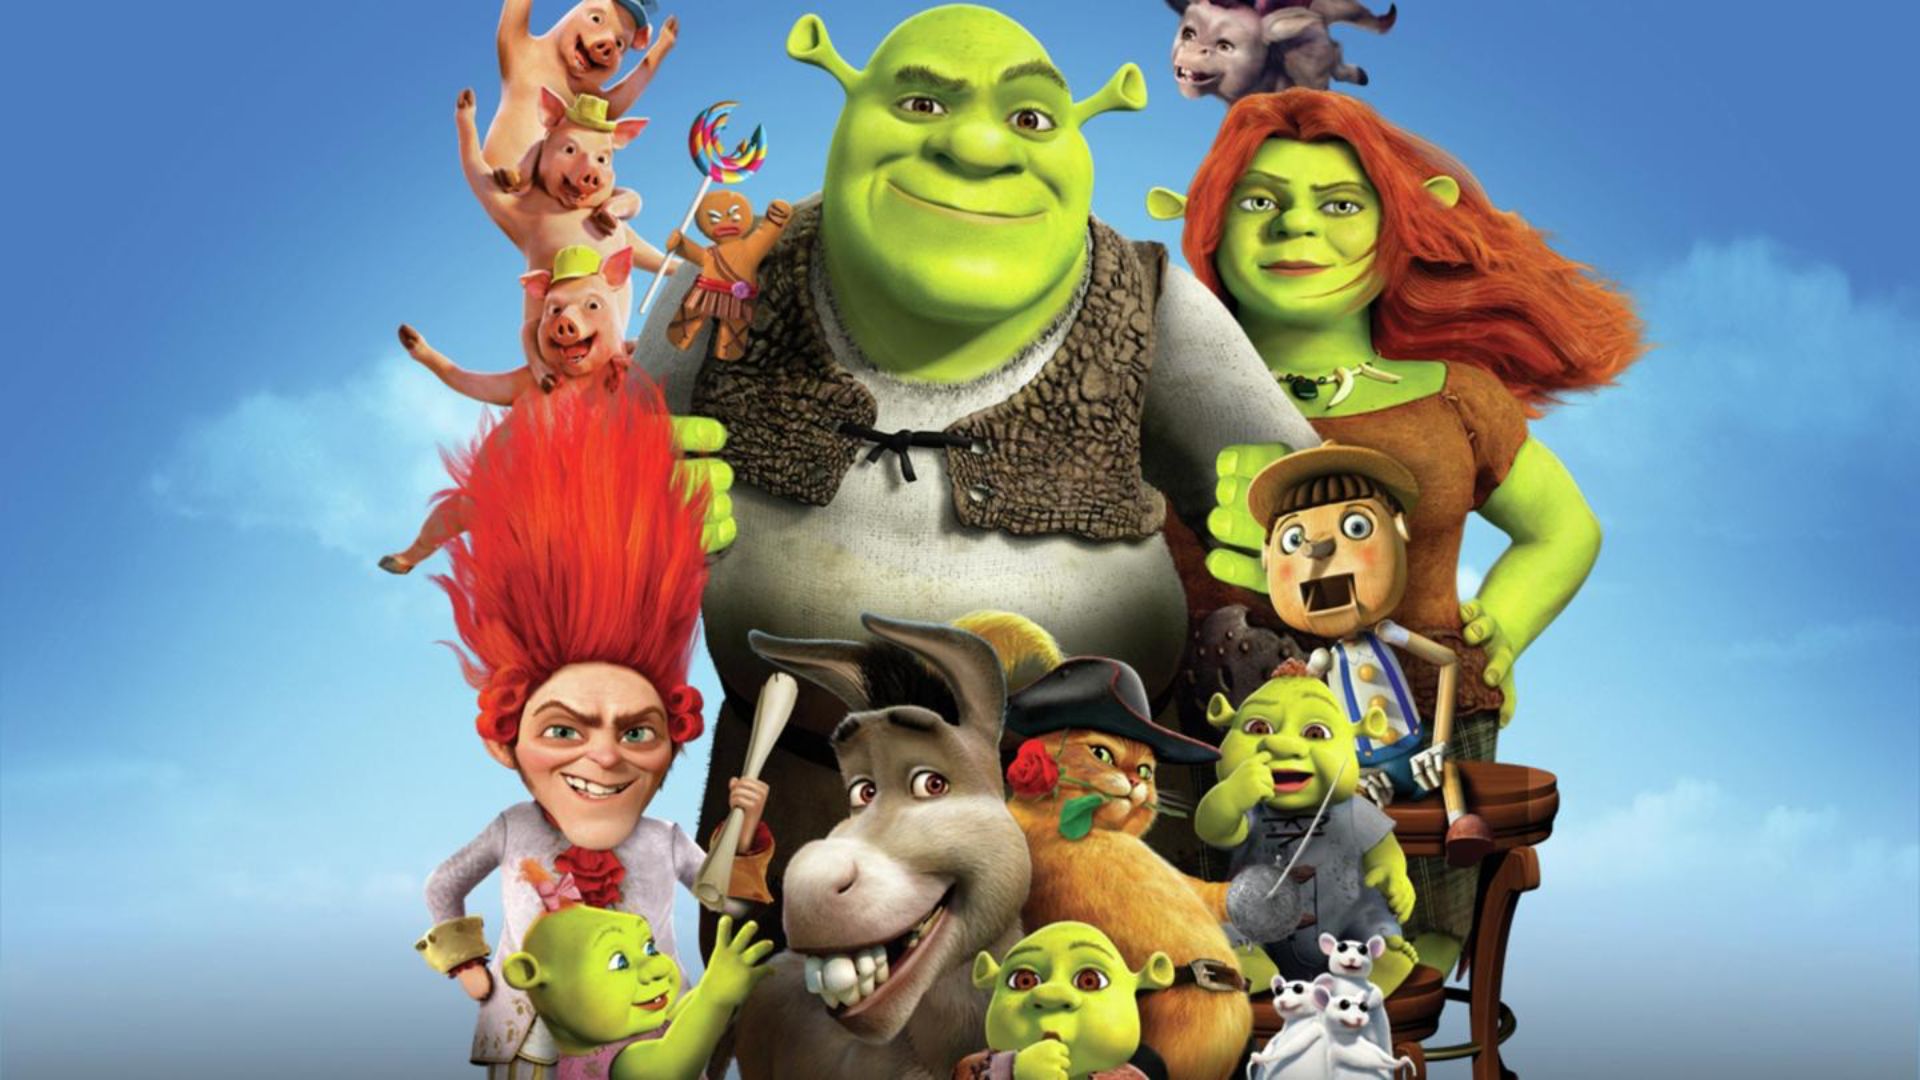 muchos personajes de Shrek en la misma imagen still